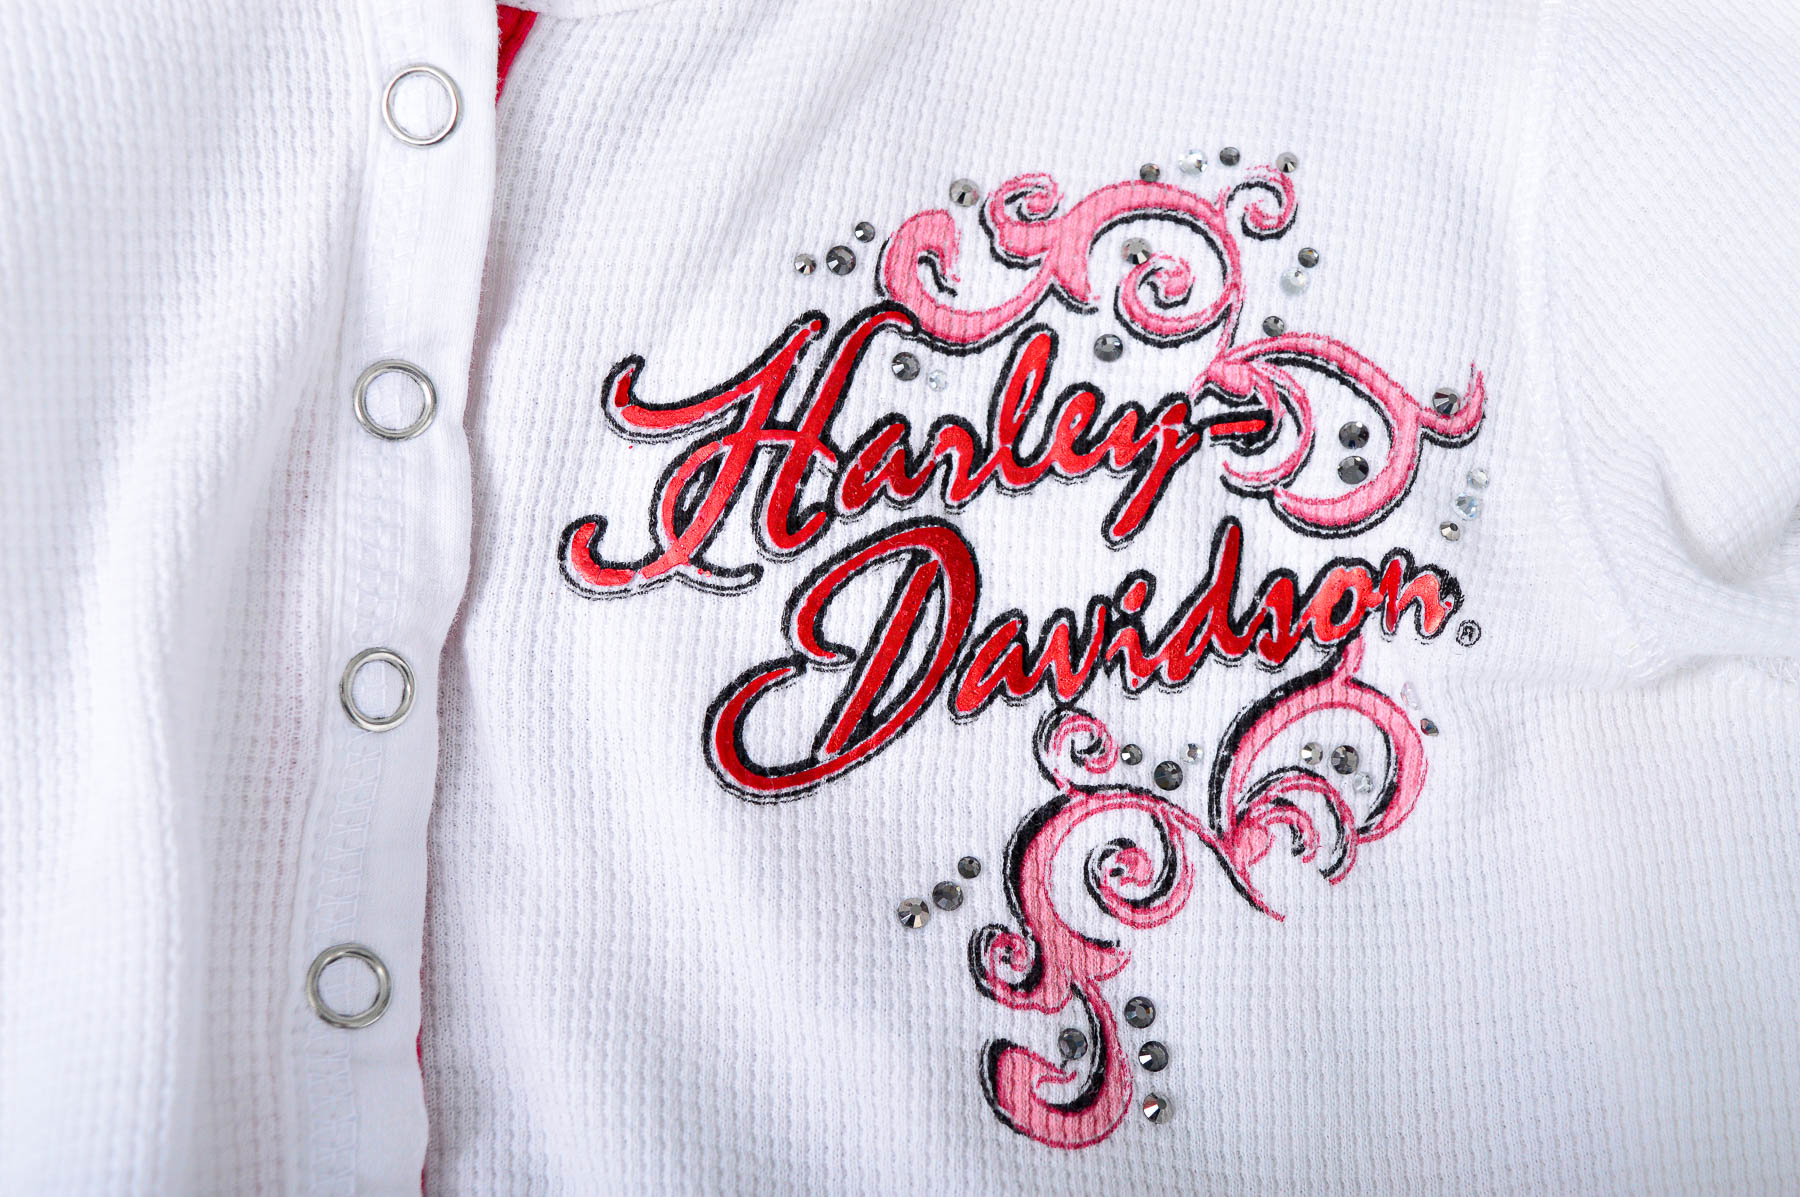 Women's blouse - Harley Davidson - 2